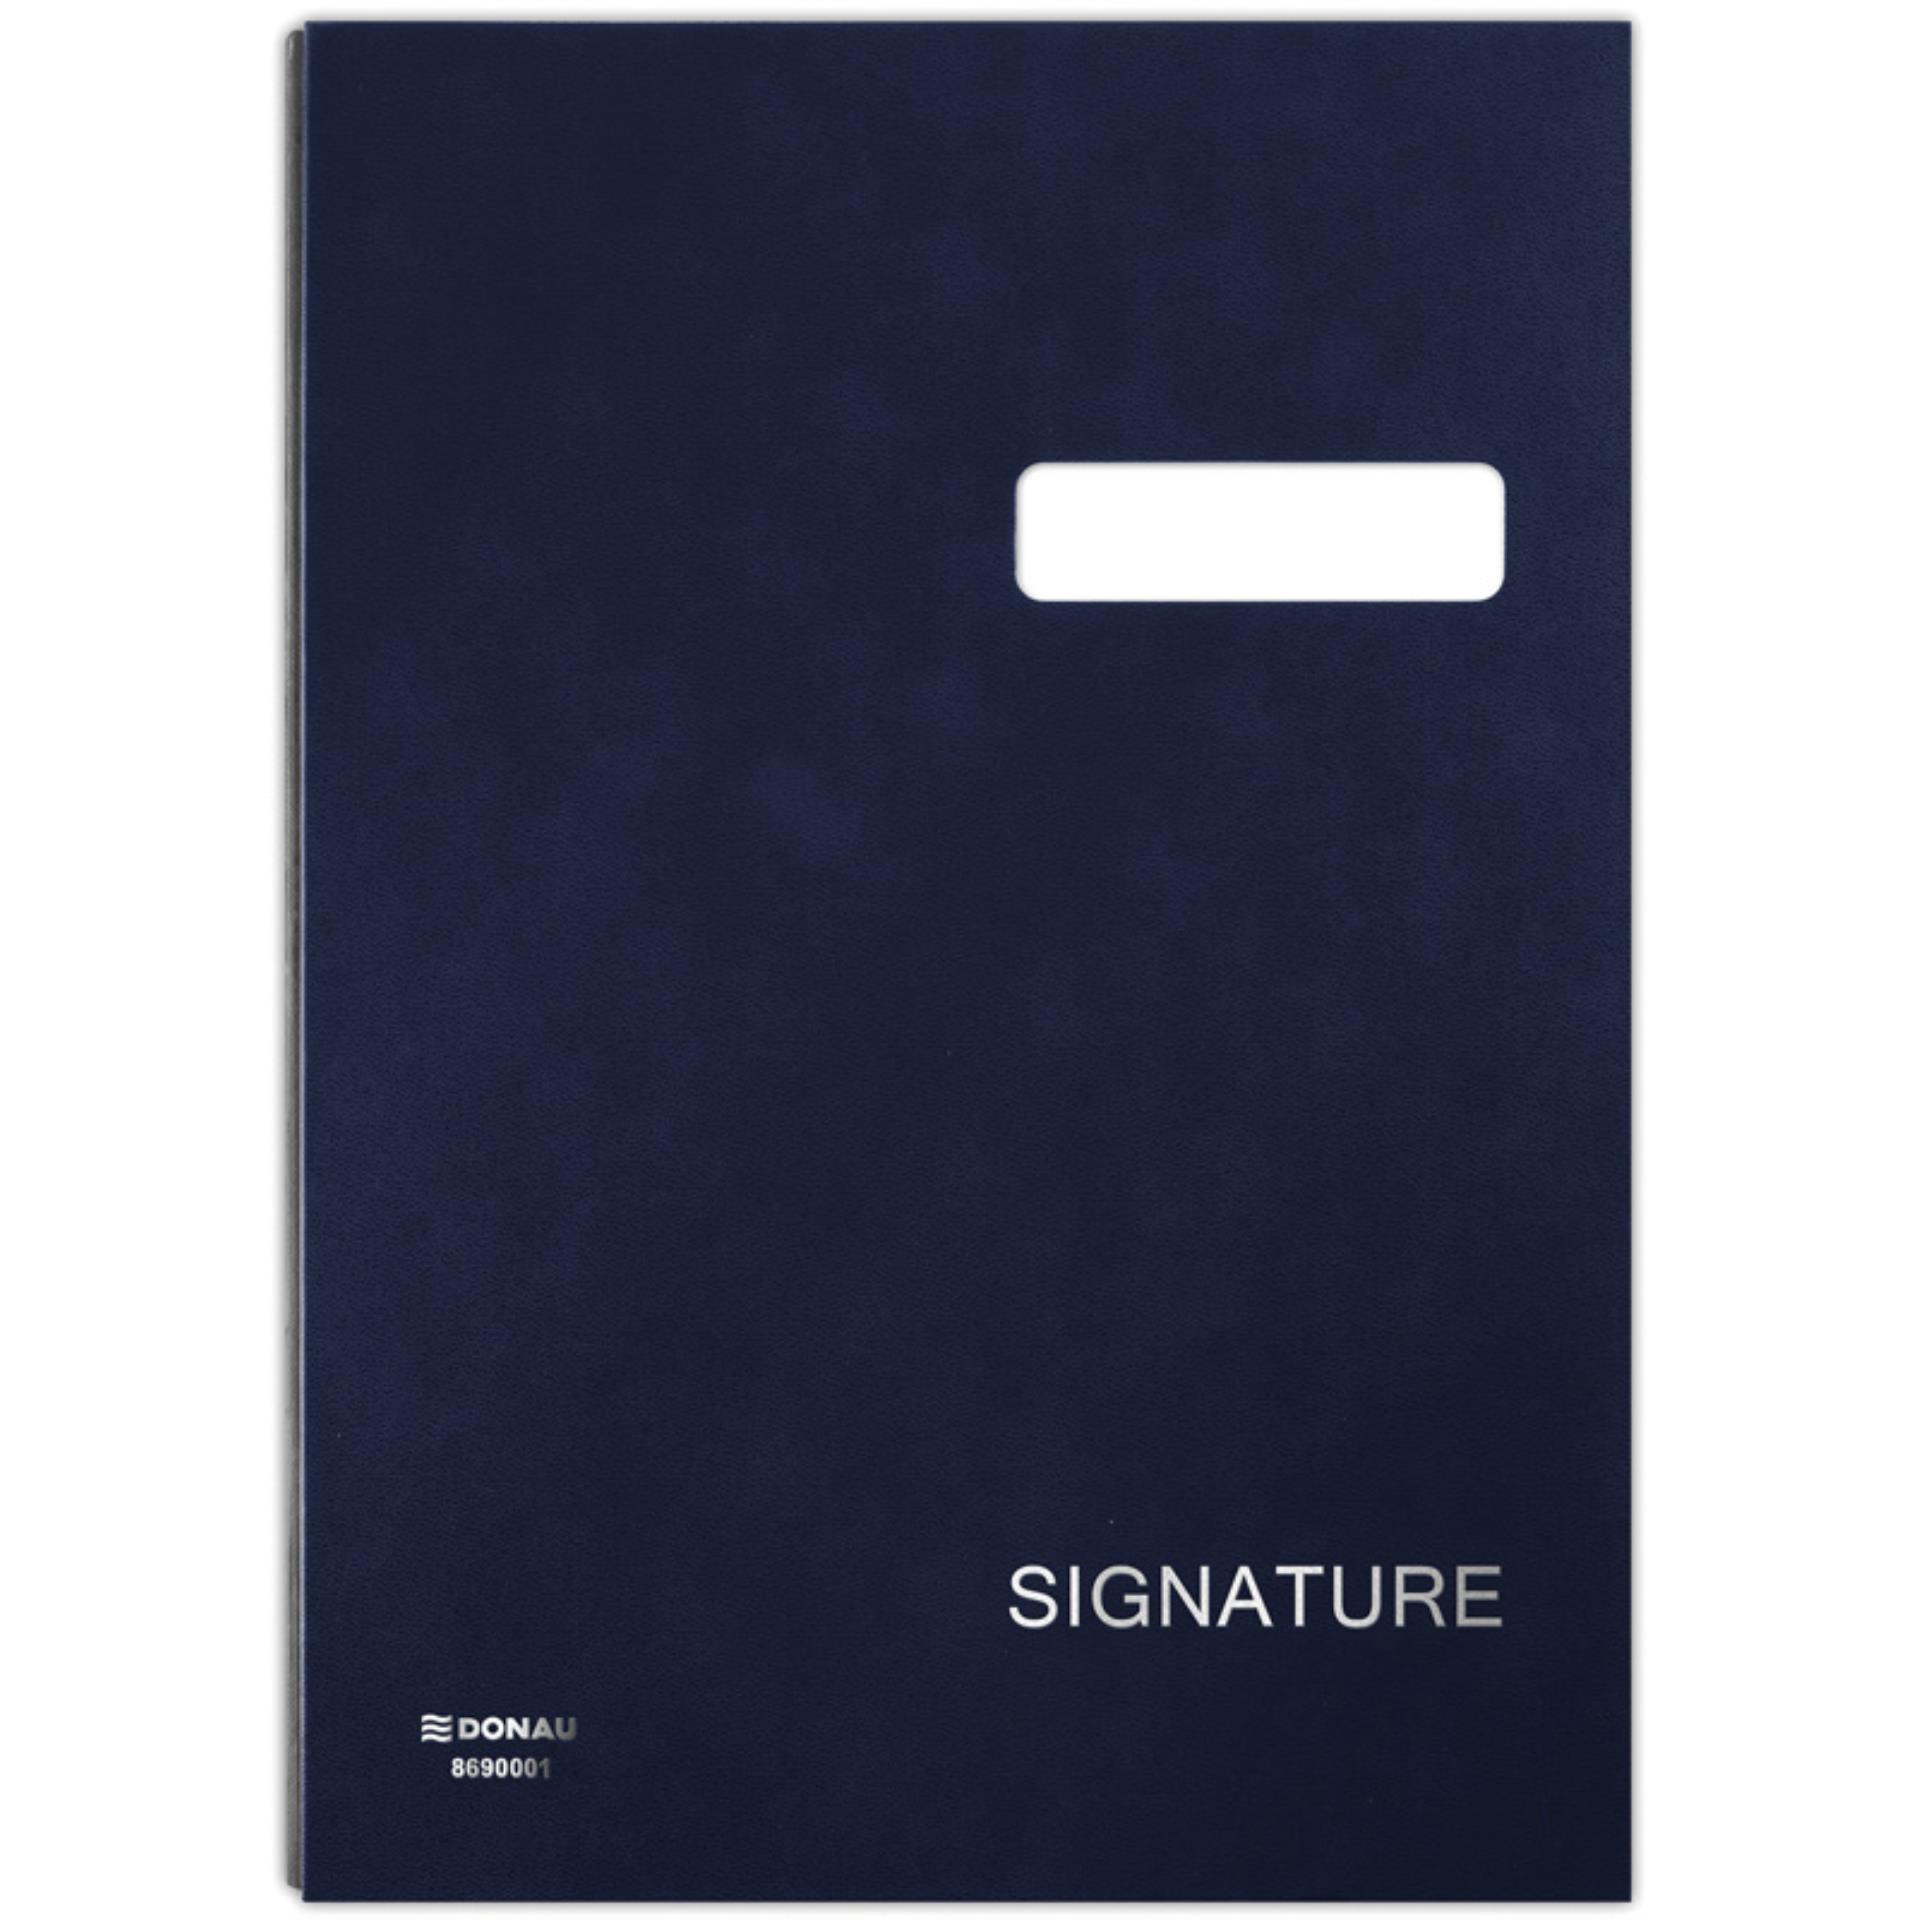 Podpisová kniha Donau - A4, modrá navy